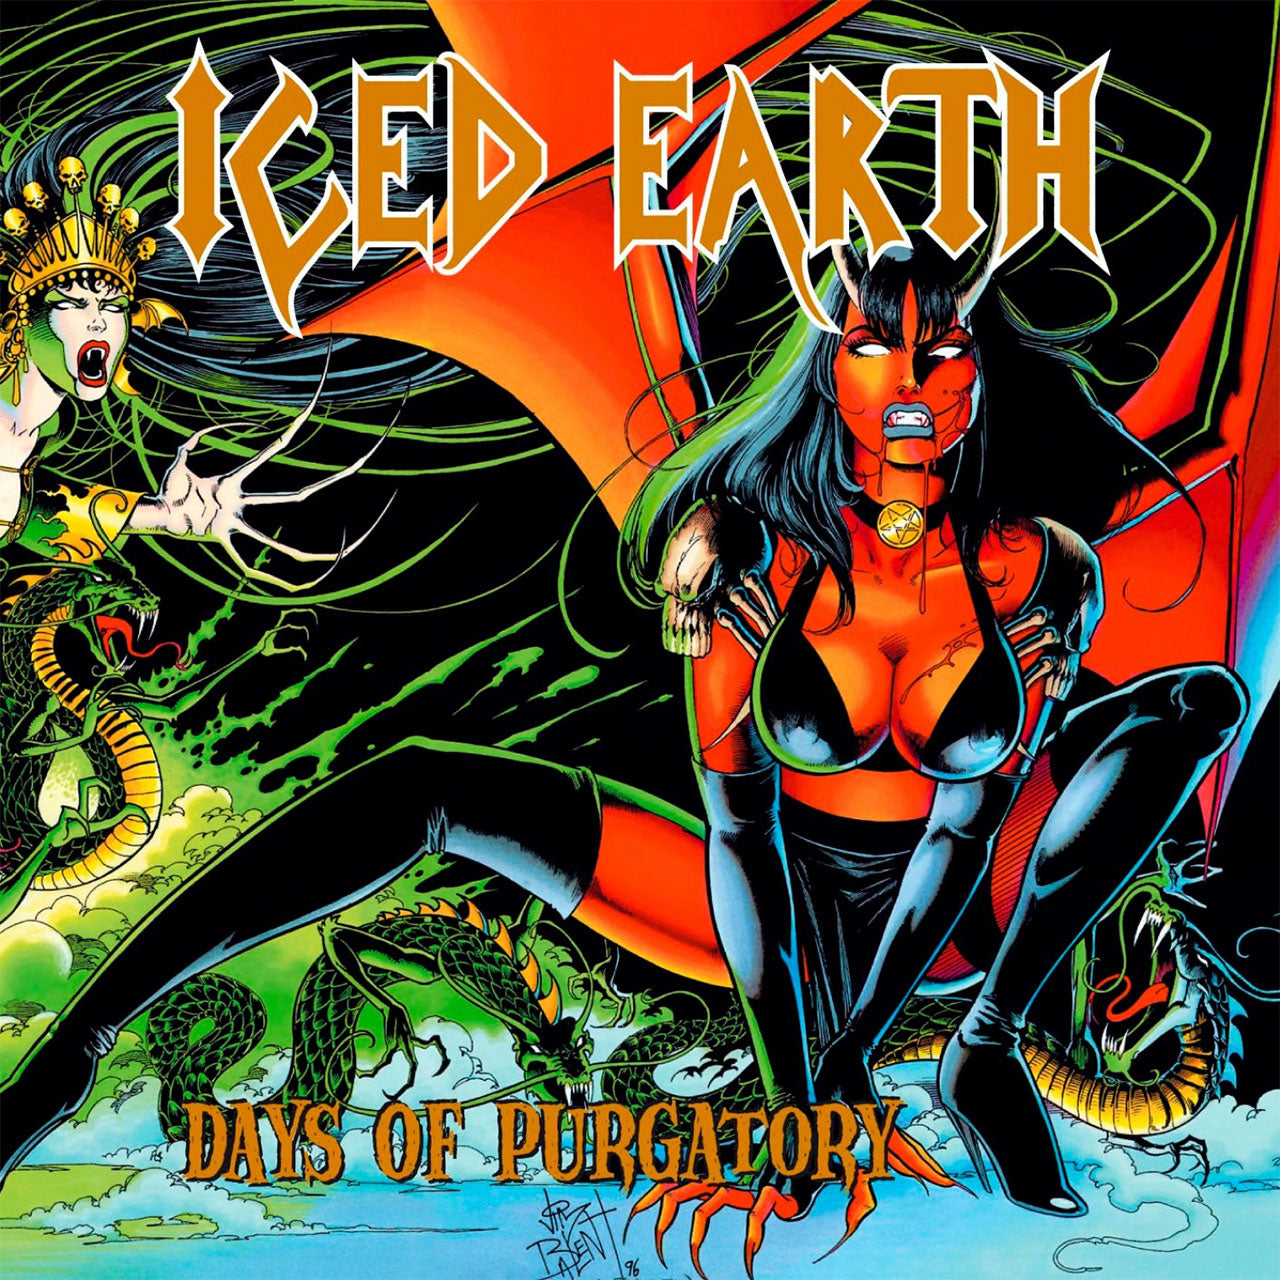 Iced Earth - Days of Purgatory (2CD)